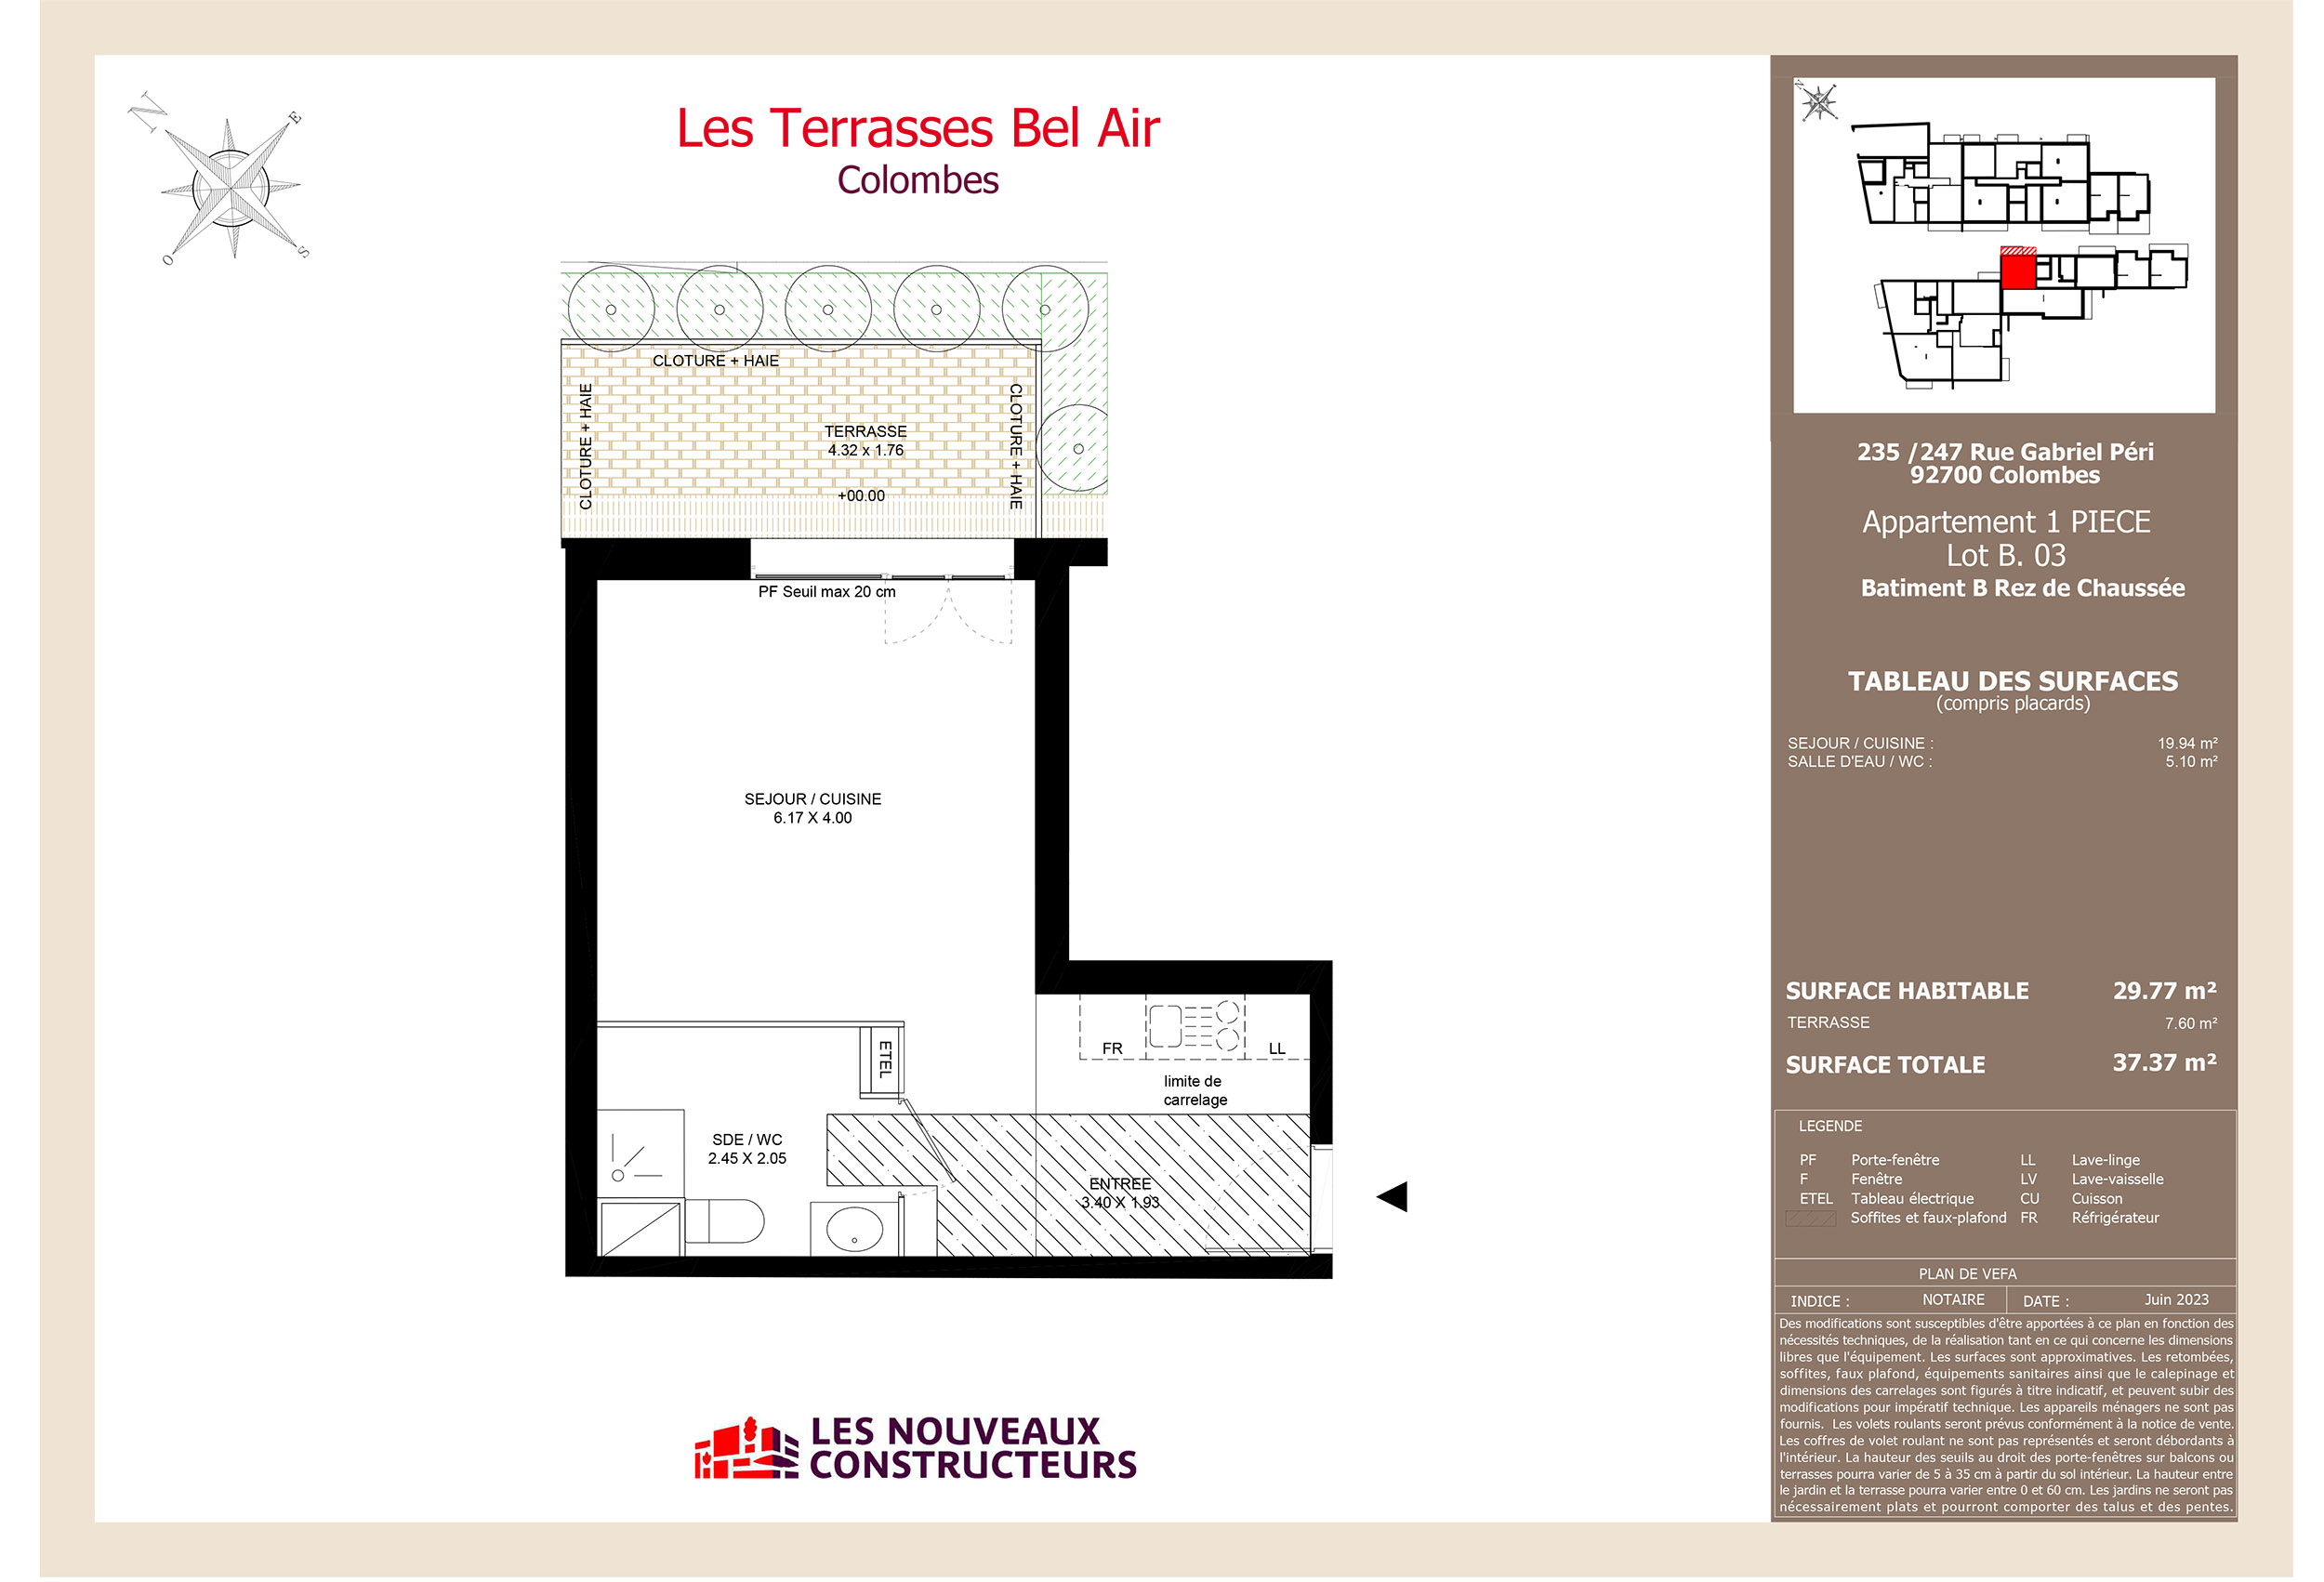 Colombes - Les Terrasses Bel Air - Lot b03 - 1 Pièce